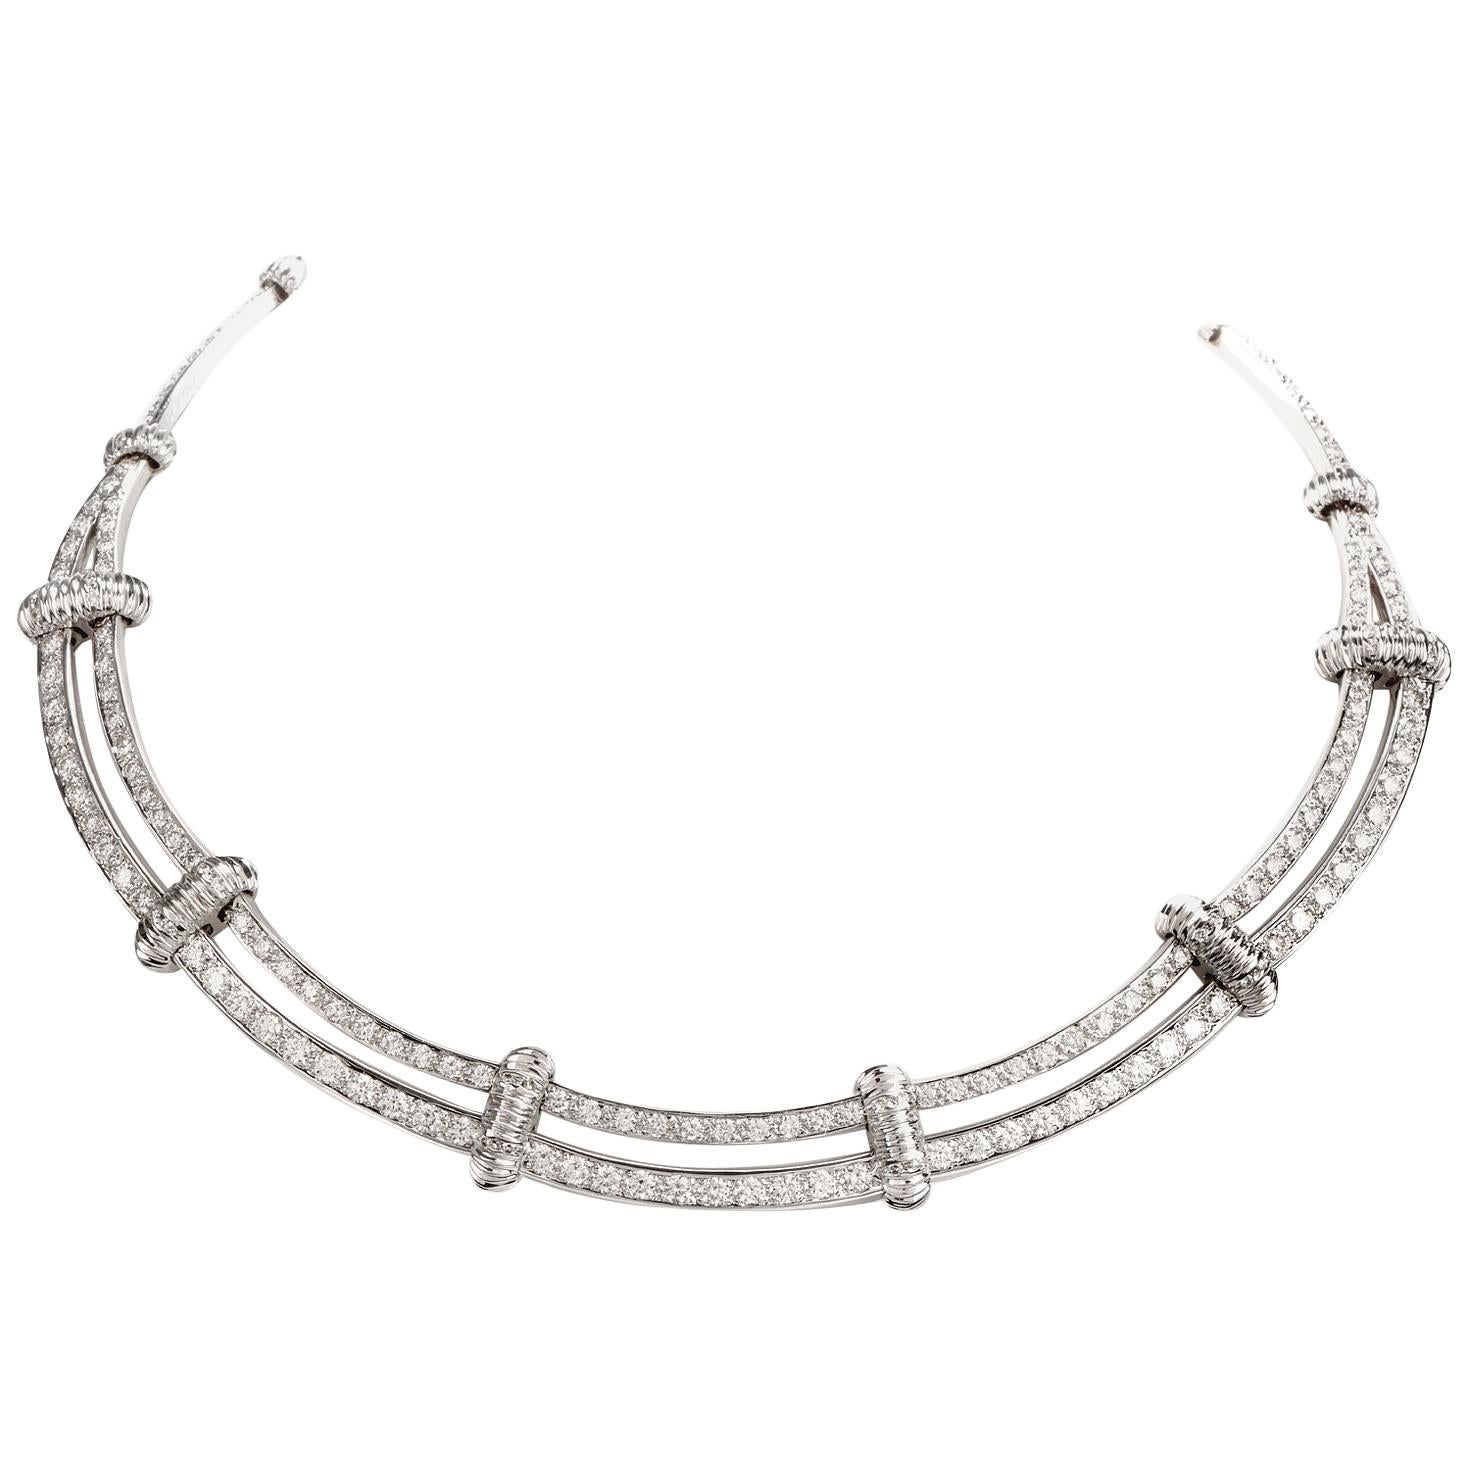  LISRO 1990's Diamond Link 18 Karat White Gold Choker Necklace